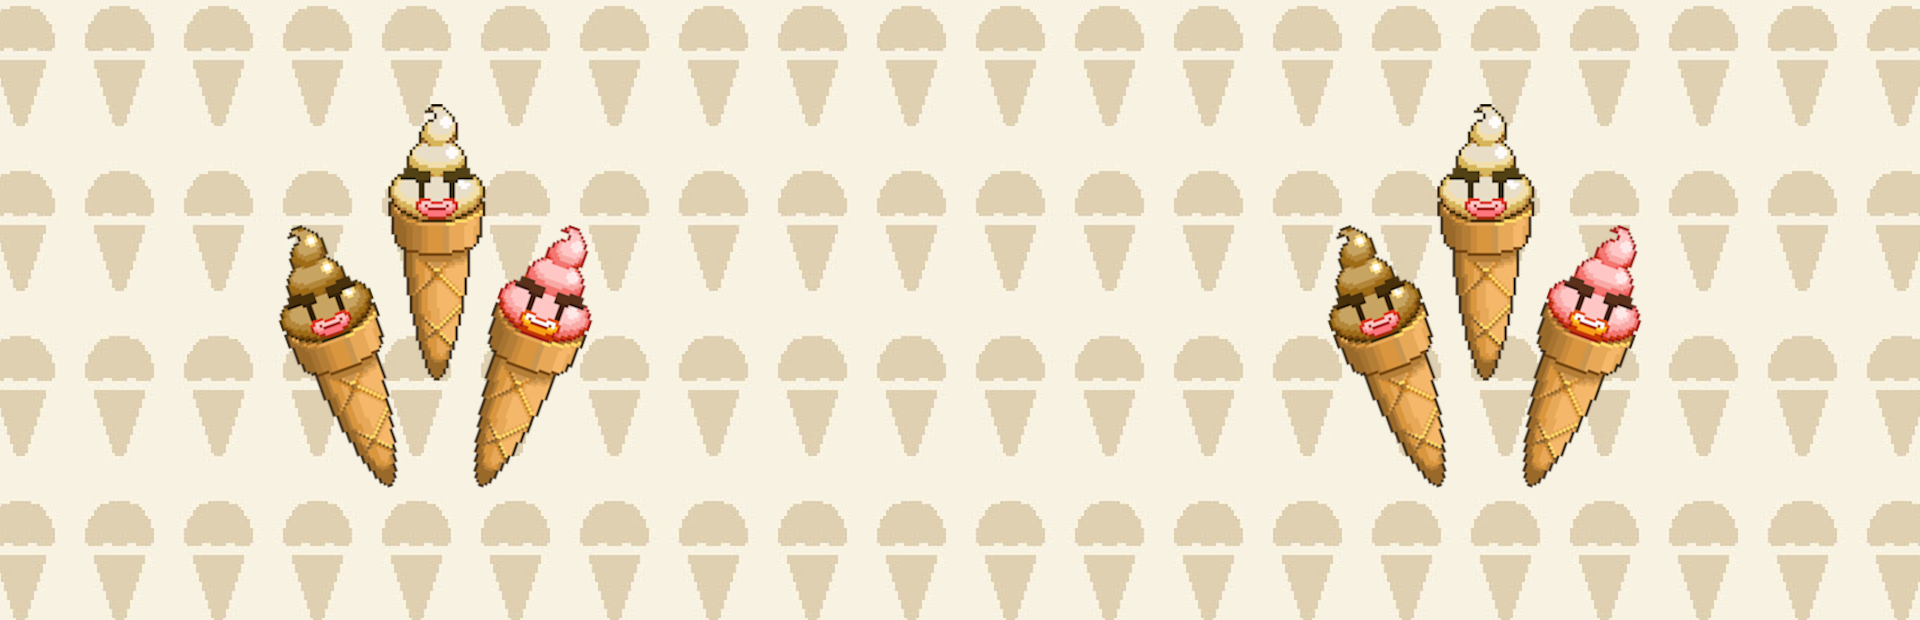 Bad Ice Cream - SteamGridDB